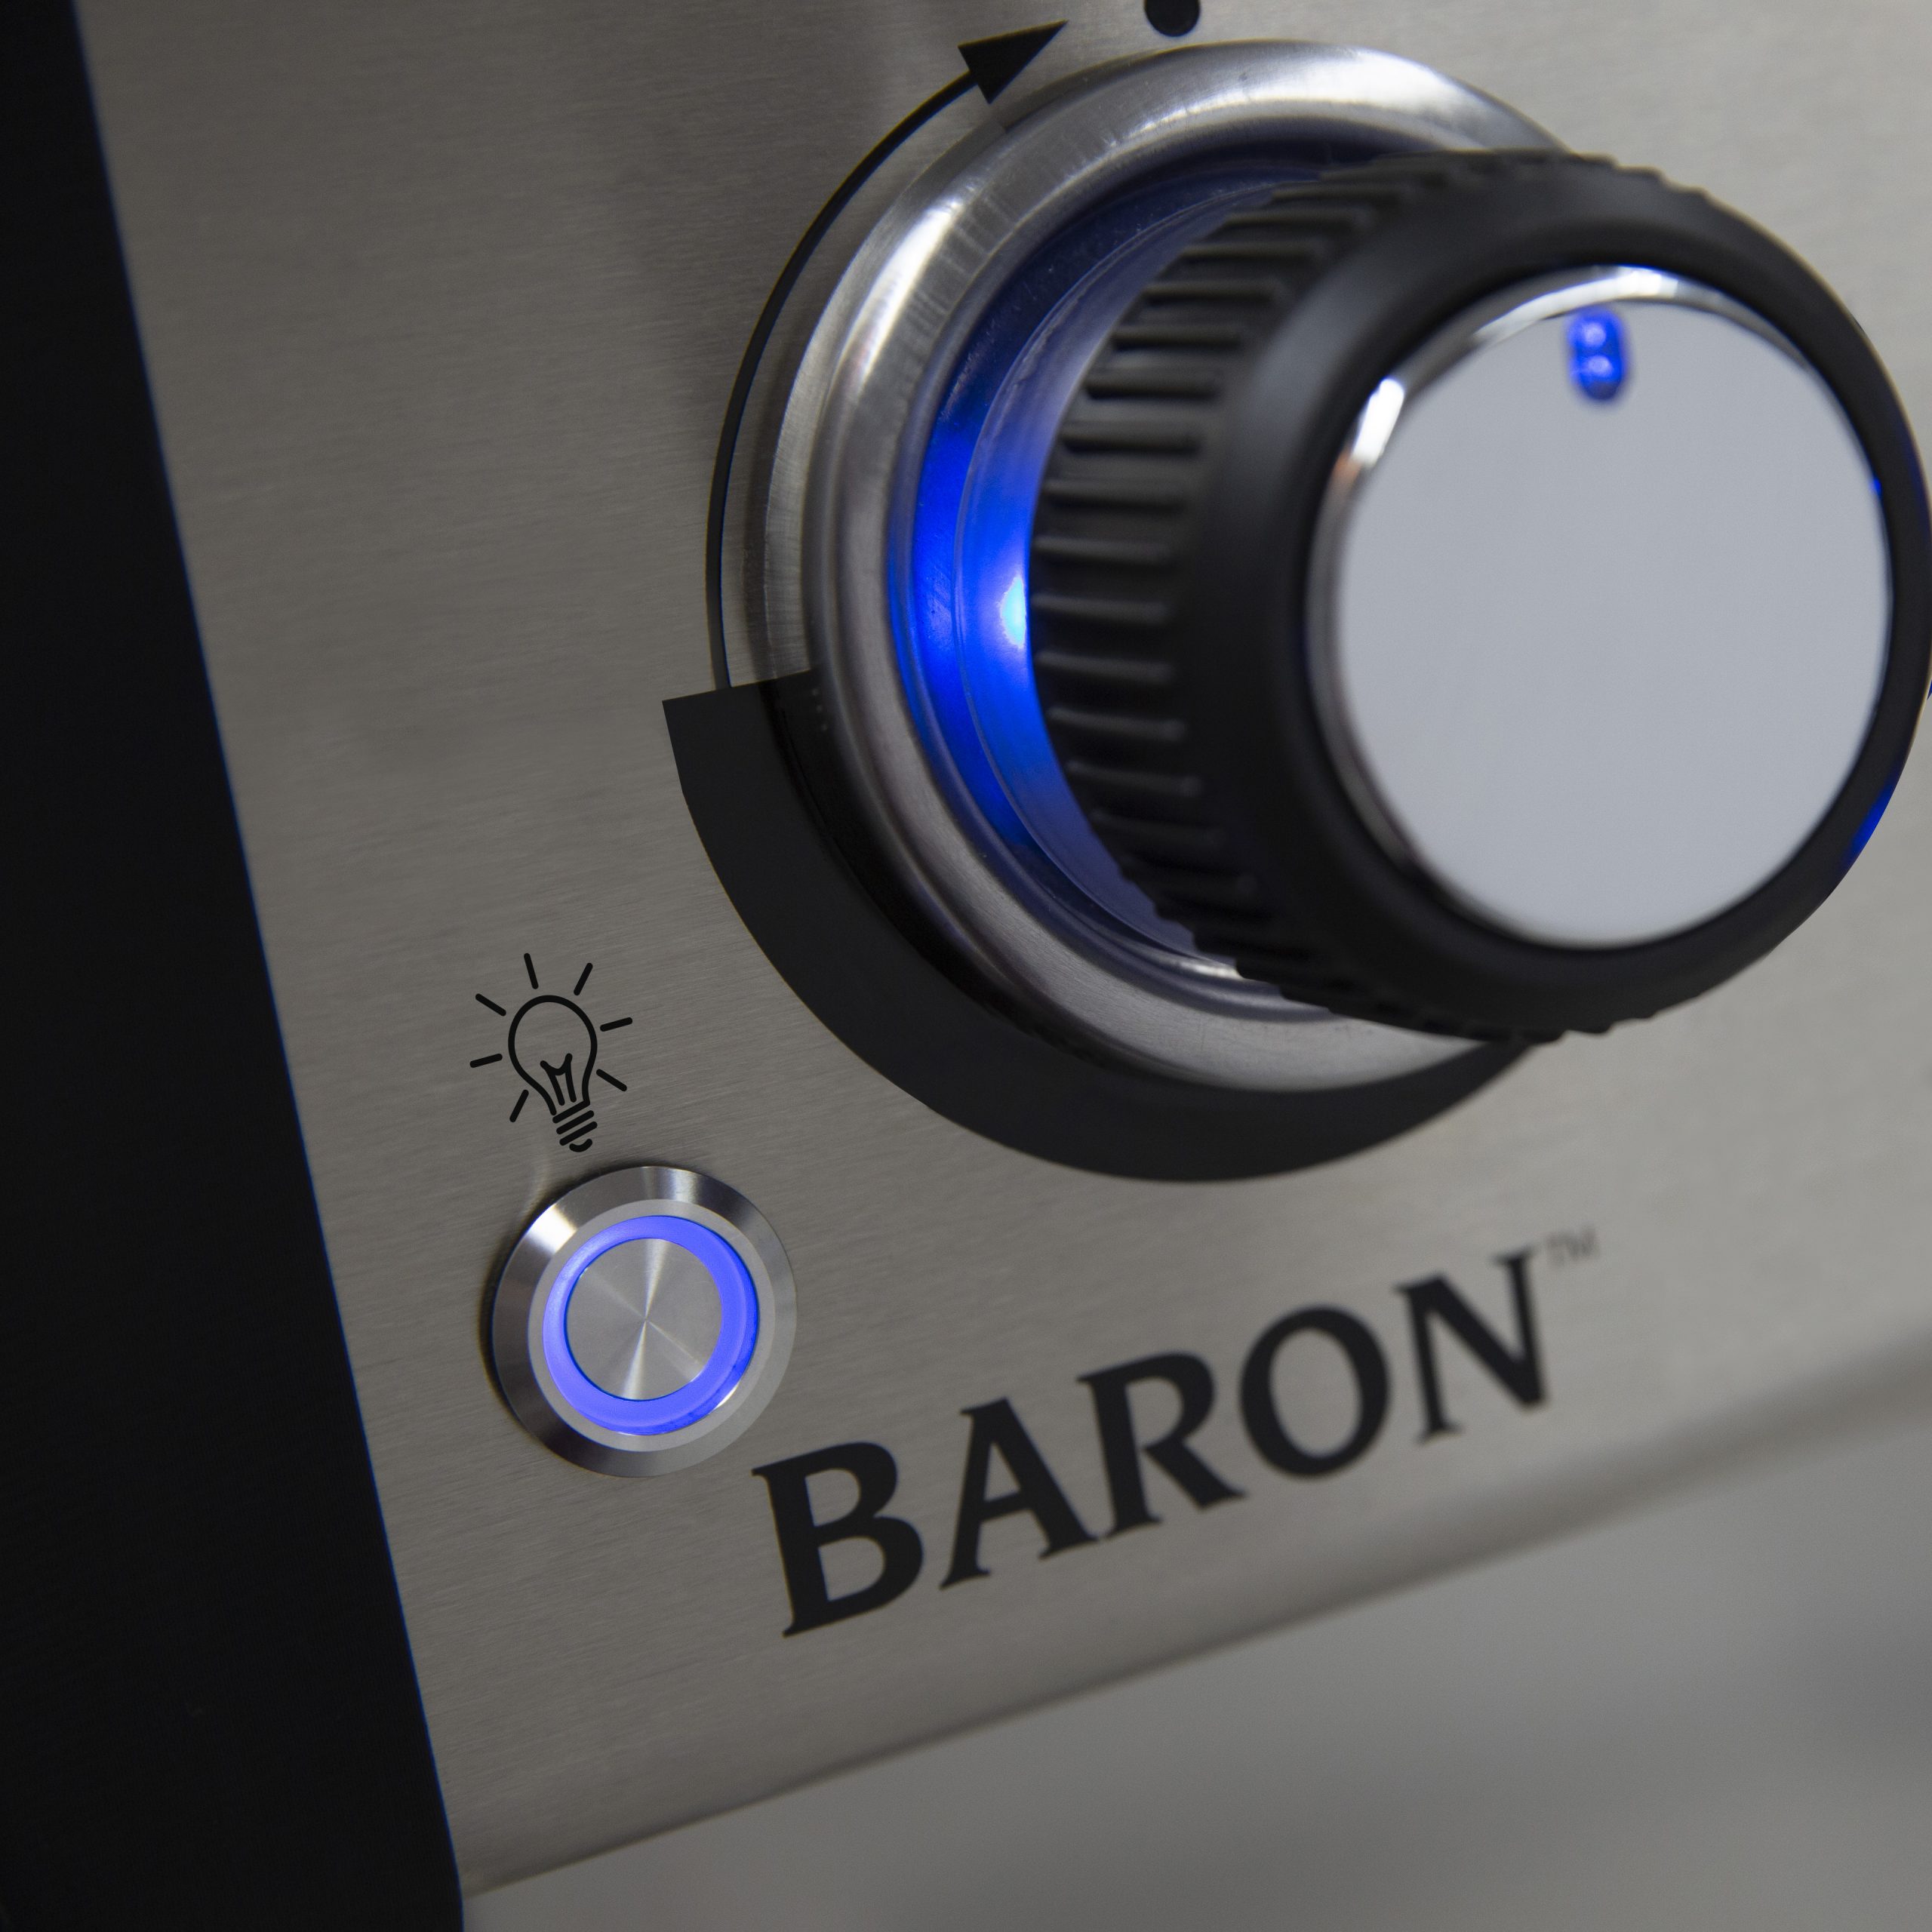 BK Baron Control Light 01 scaled